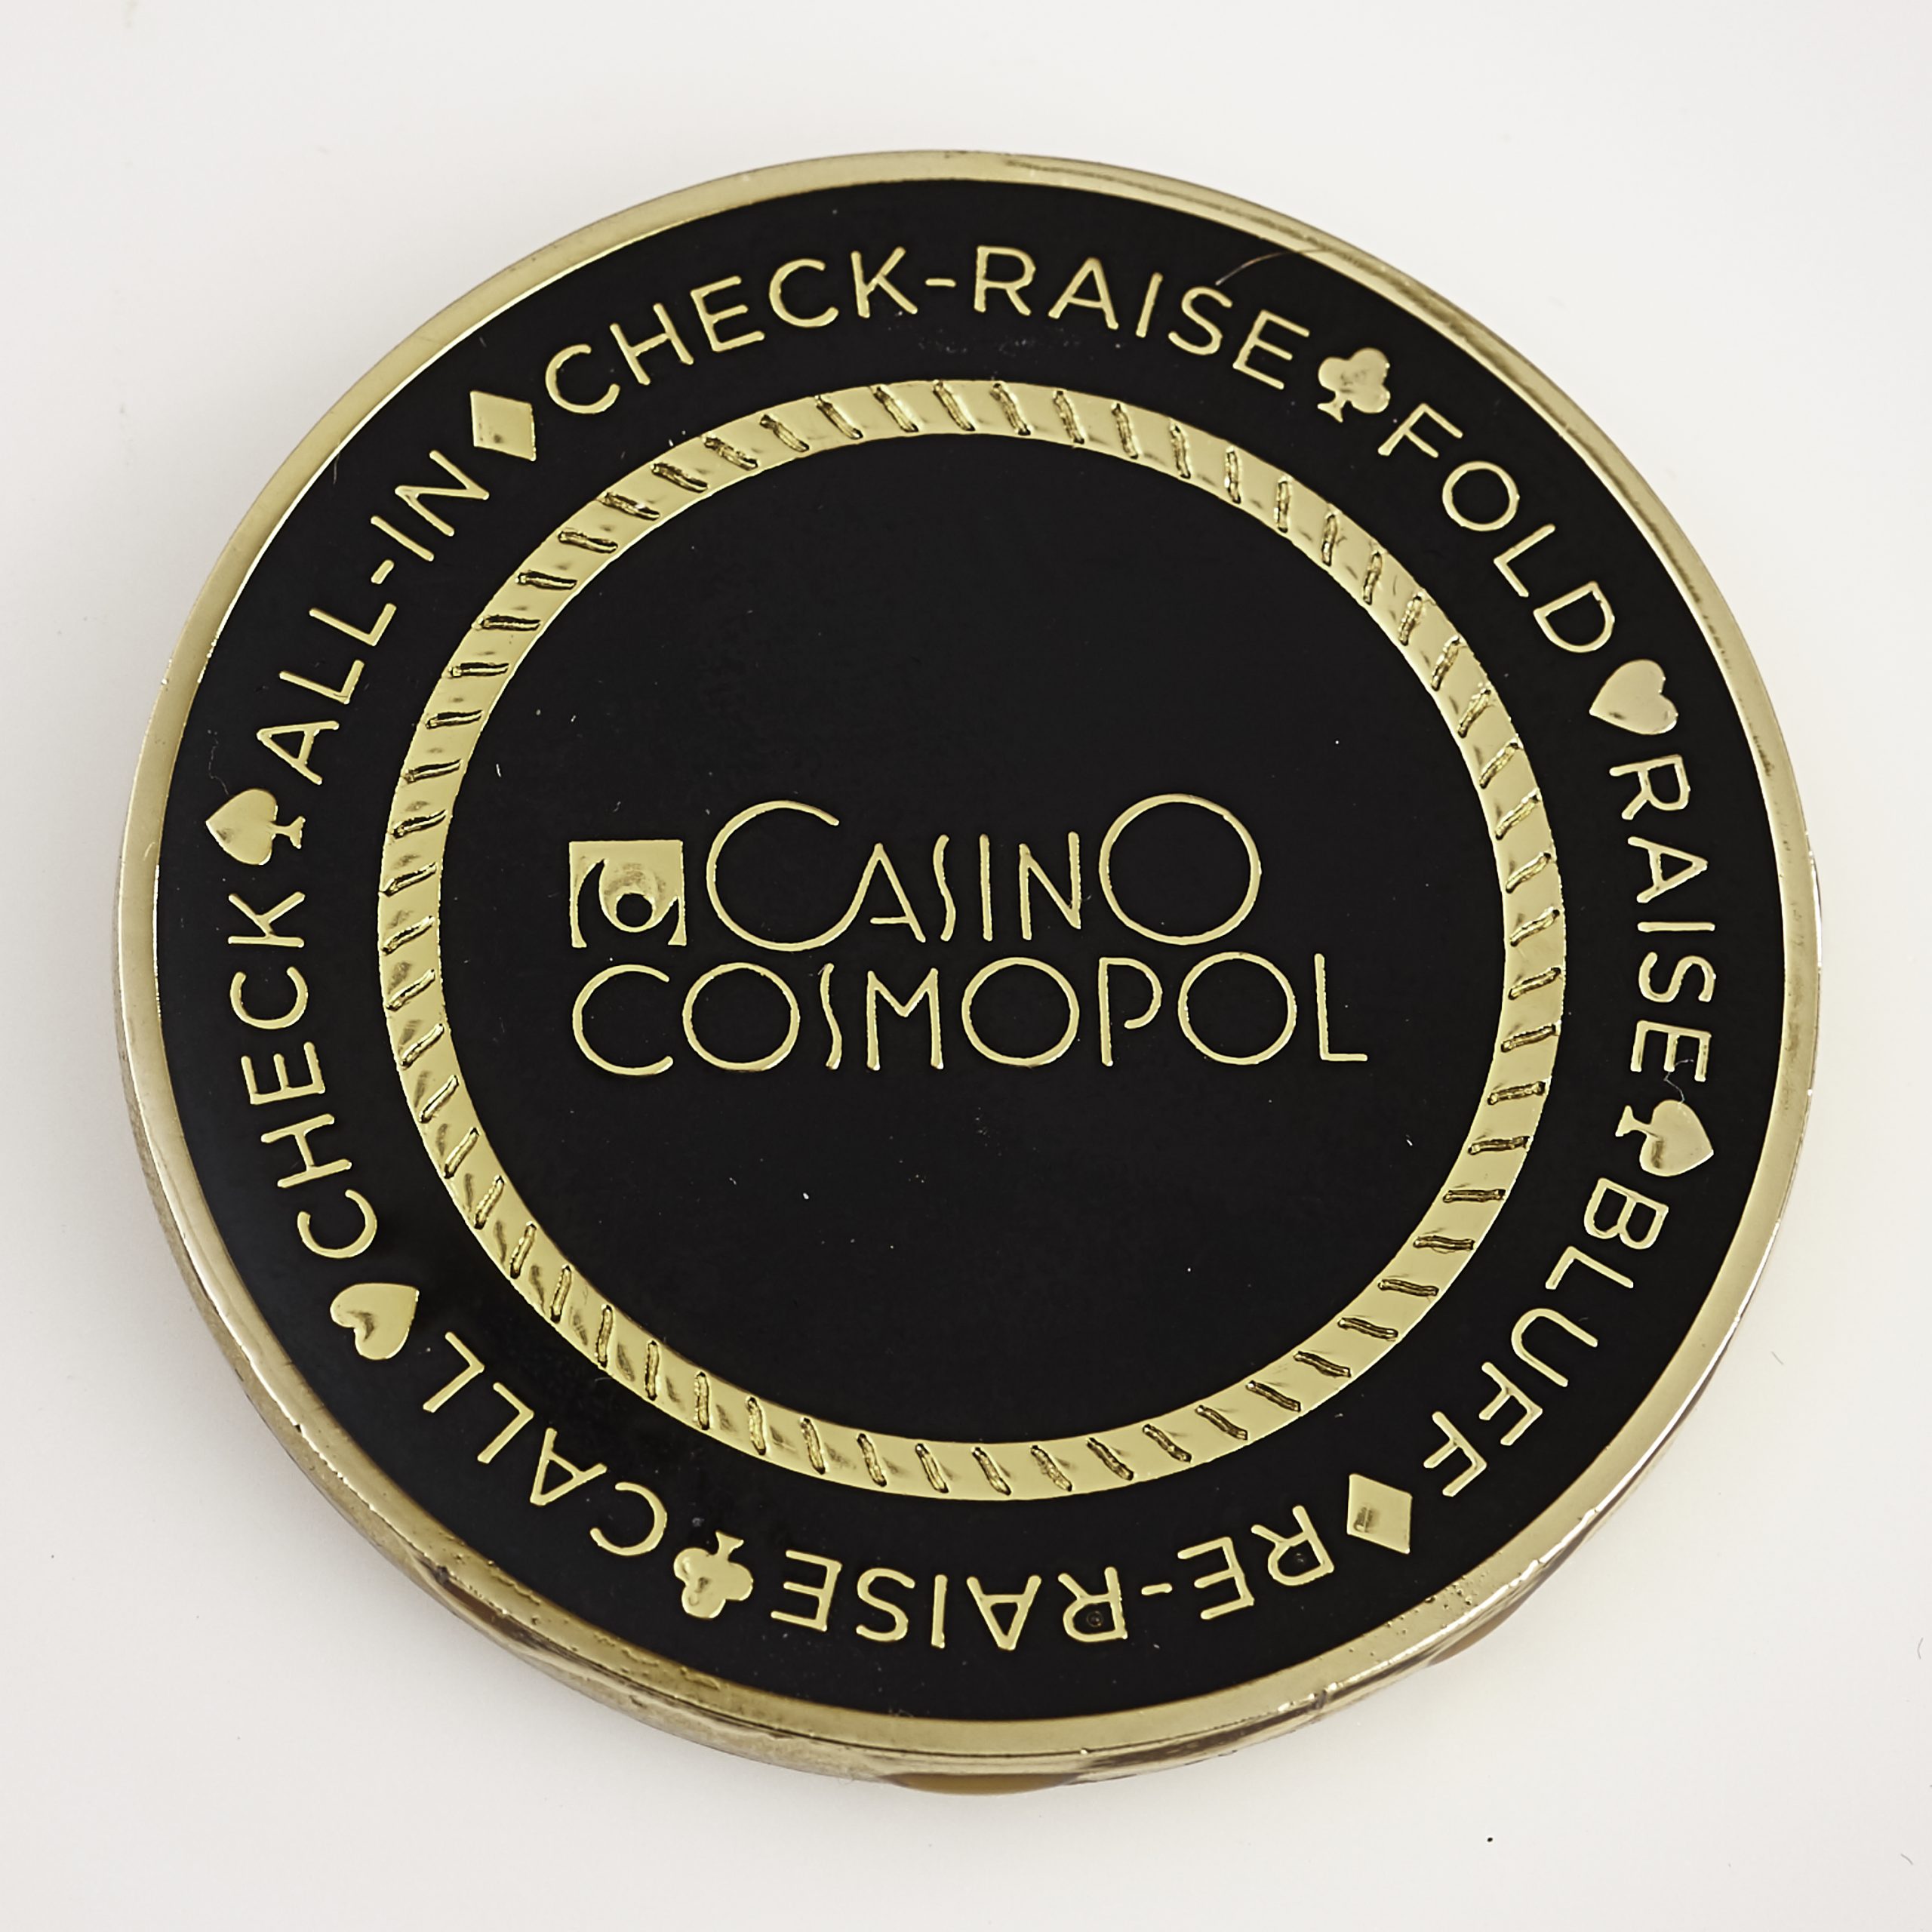 CASINO COSMOPOL, EUROPEAN DEALER CHAMPIONSHIP, Poker Card Guard